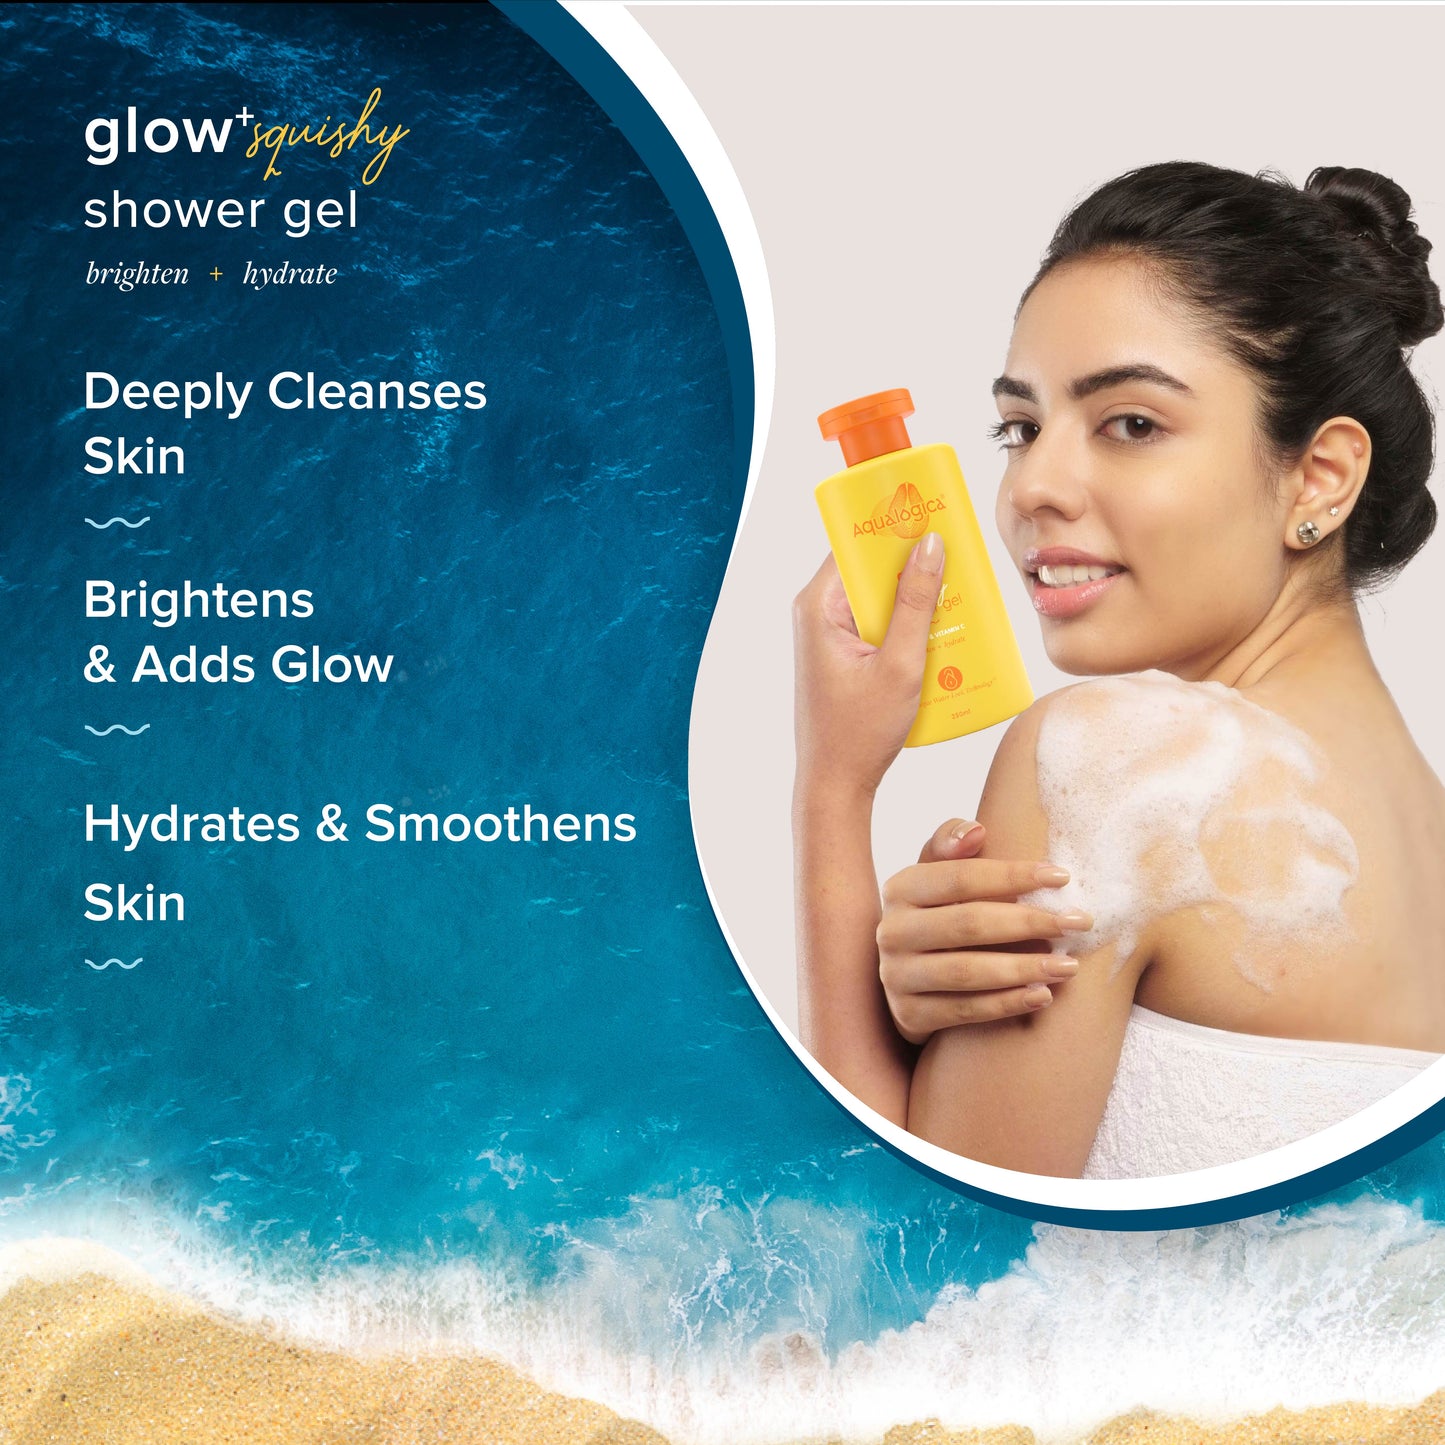 Glow+ Squishy Shower Gel with Papaya & Vitamin C for Glowing Skin - 250ml